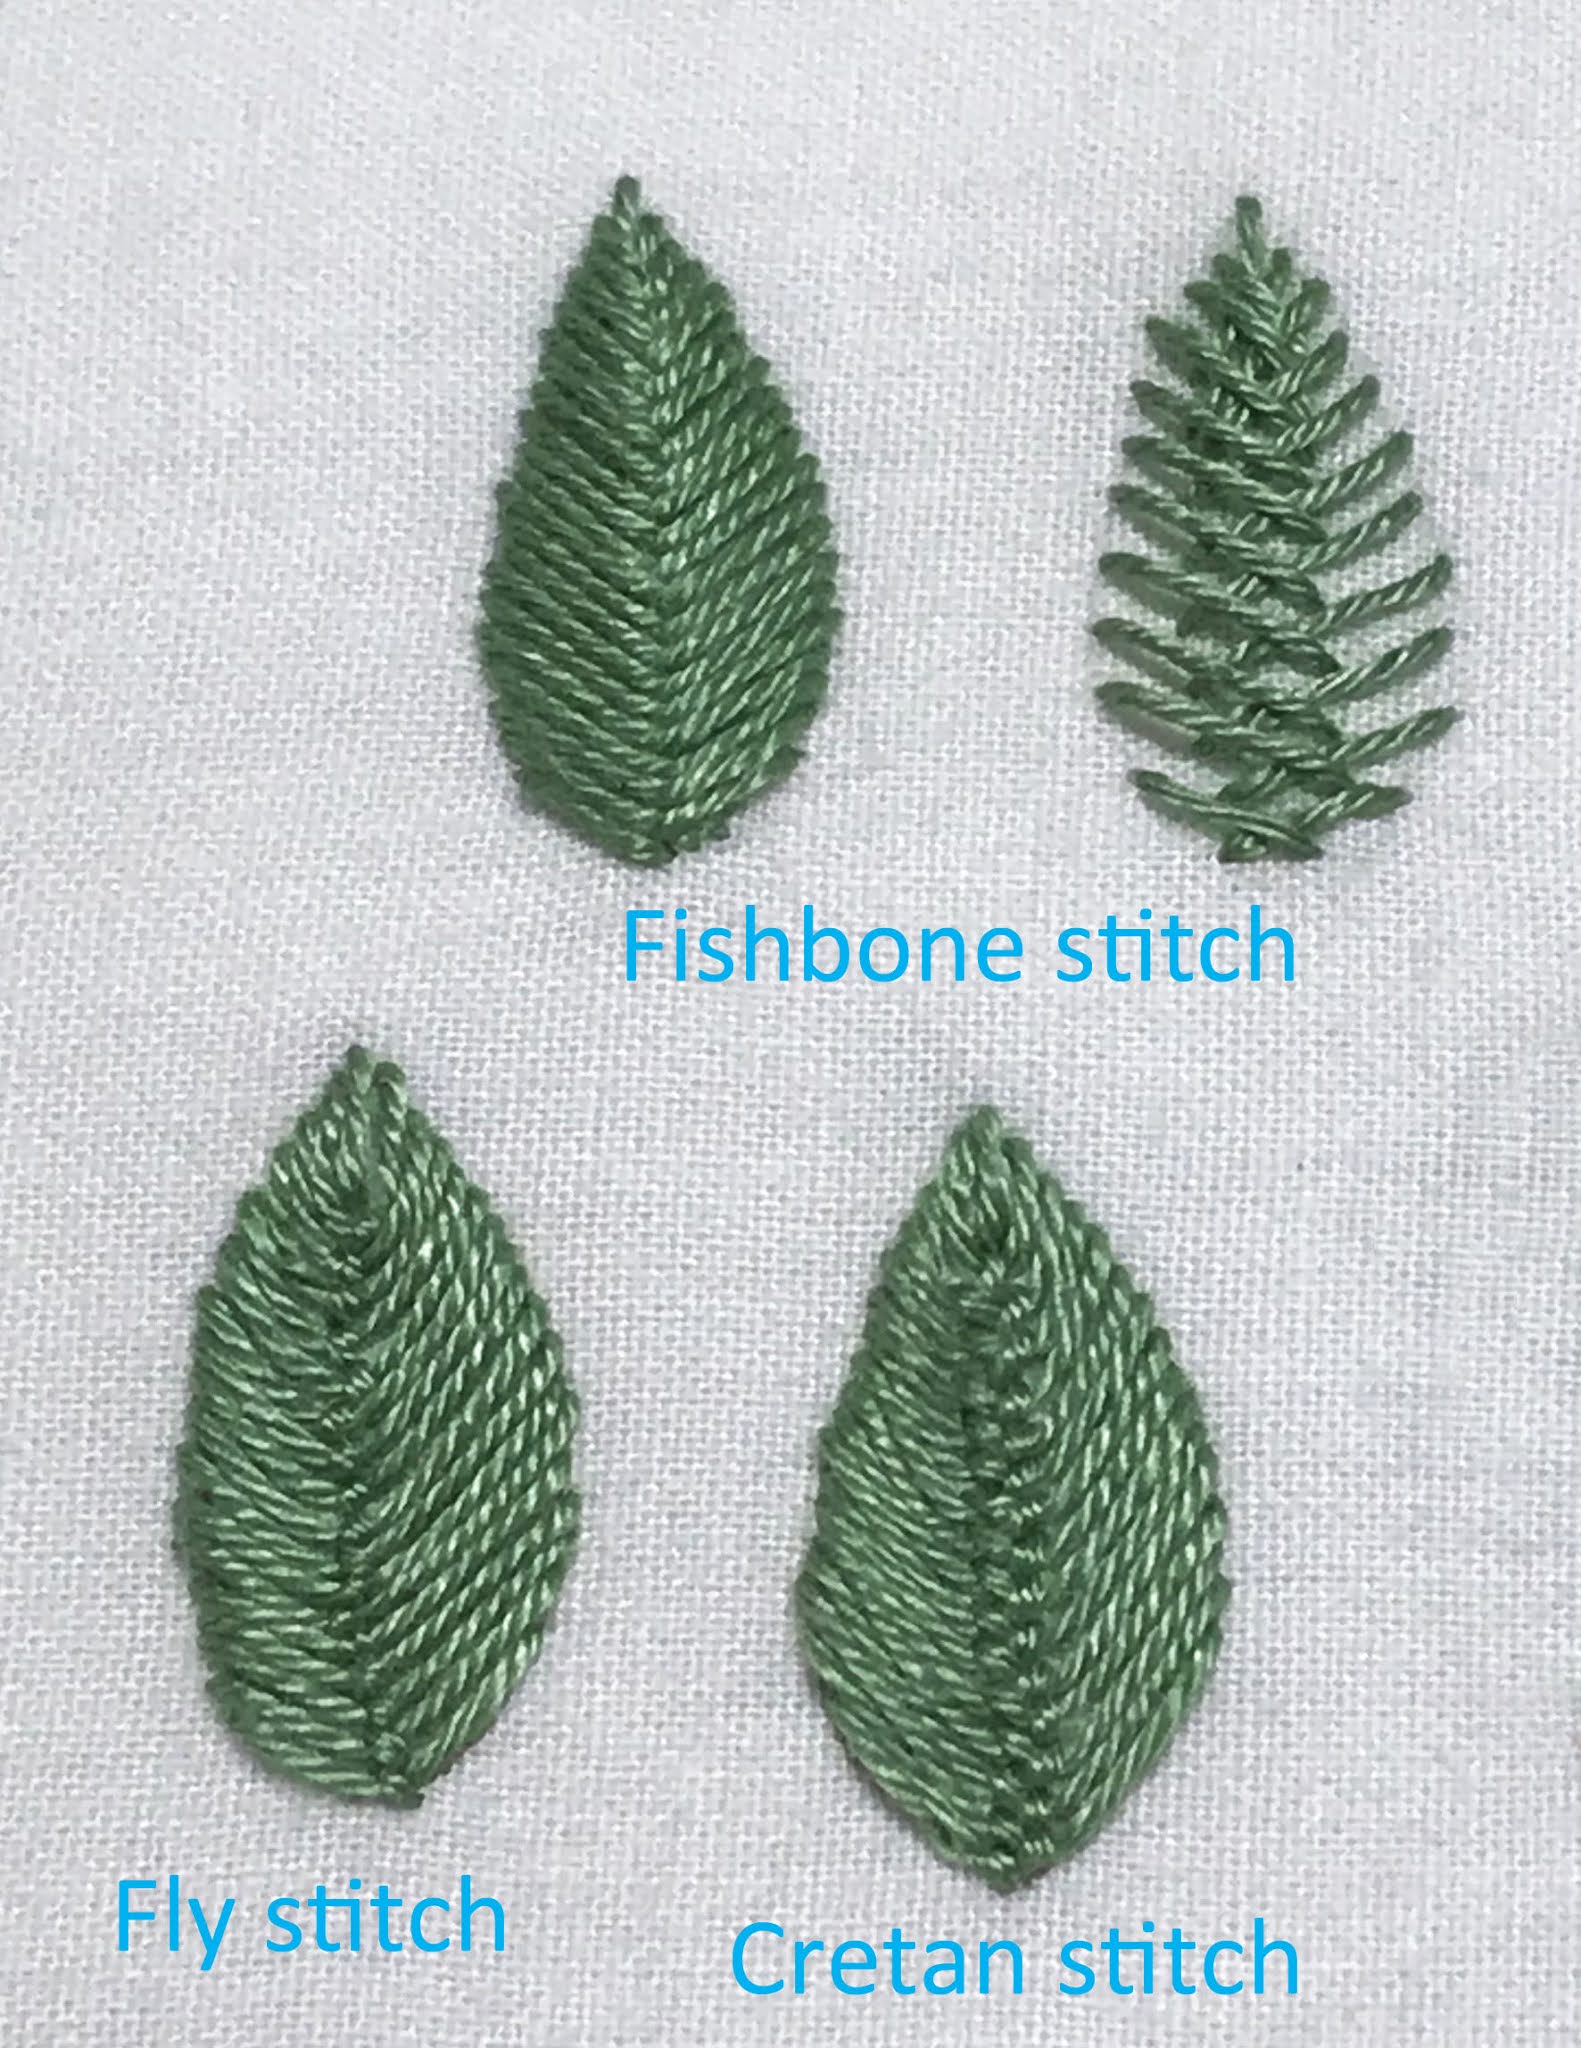 Leaf Sampler - Part 3, Fishbone stitch